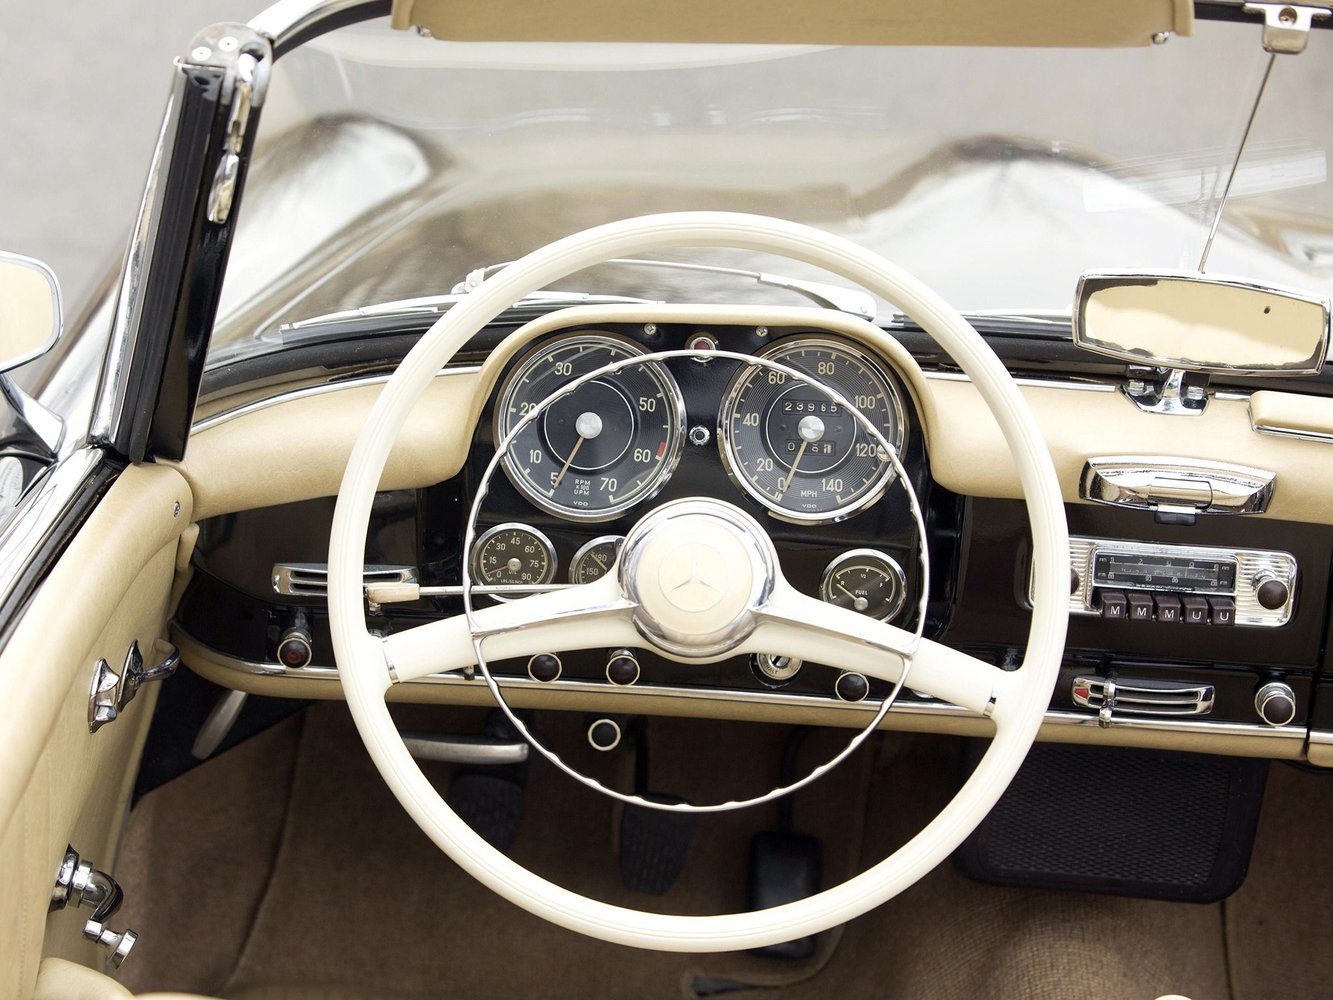 купе Mercedes-Benz 190 SL 1955 - 1963г выпуска модификация 1.9 MT (105 л.с.)